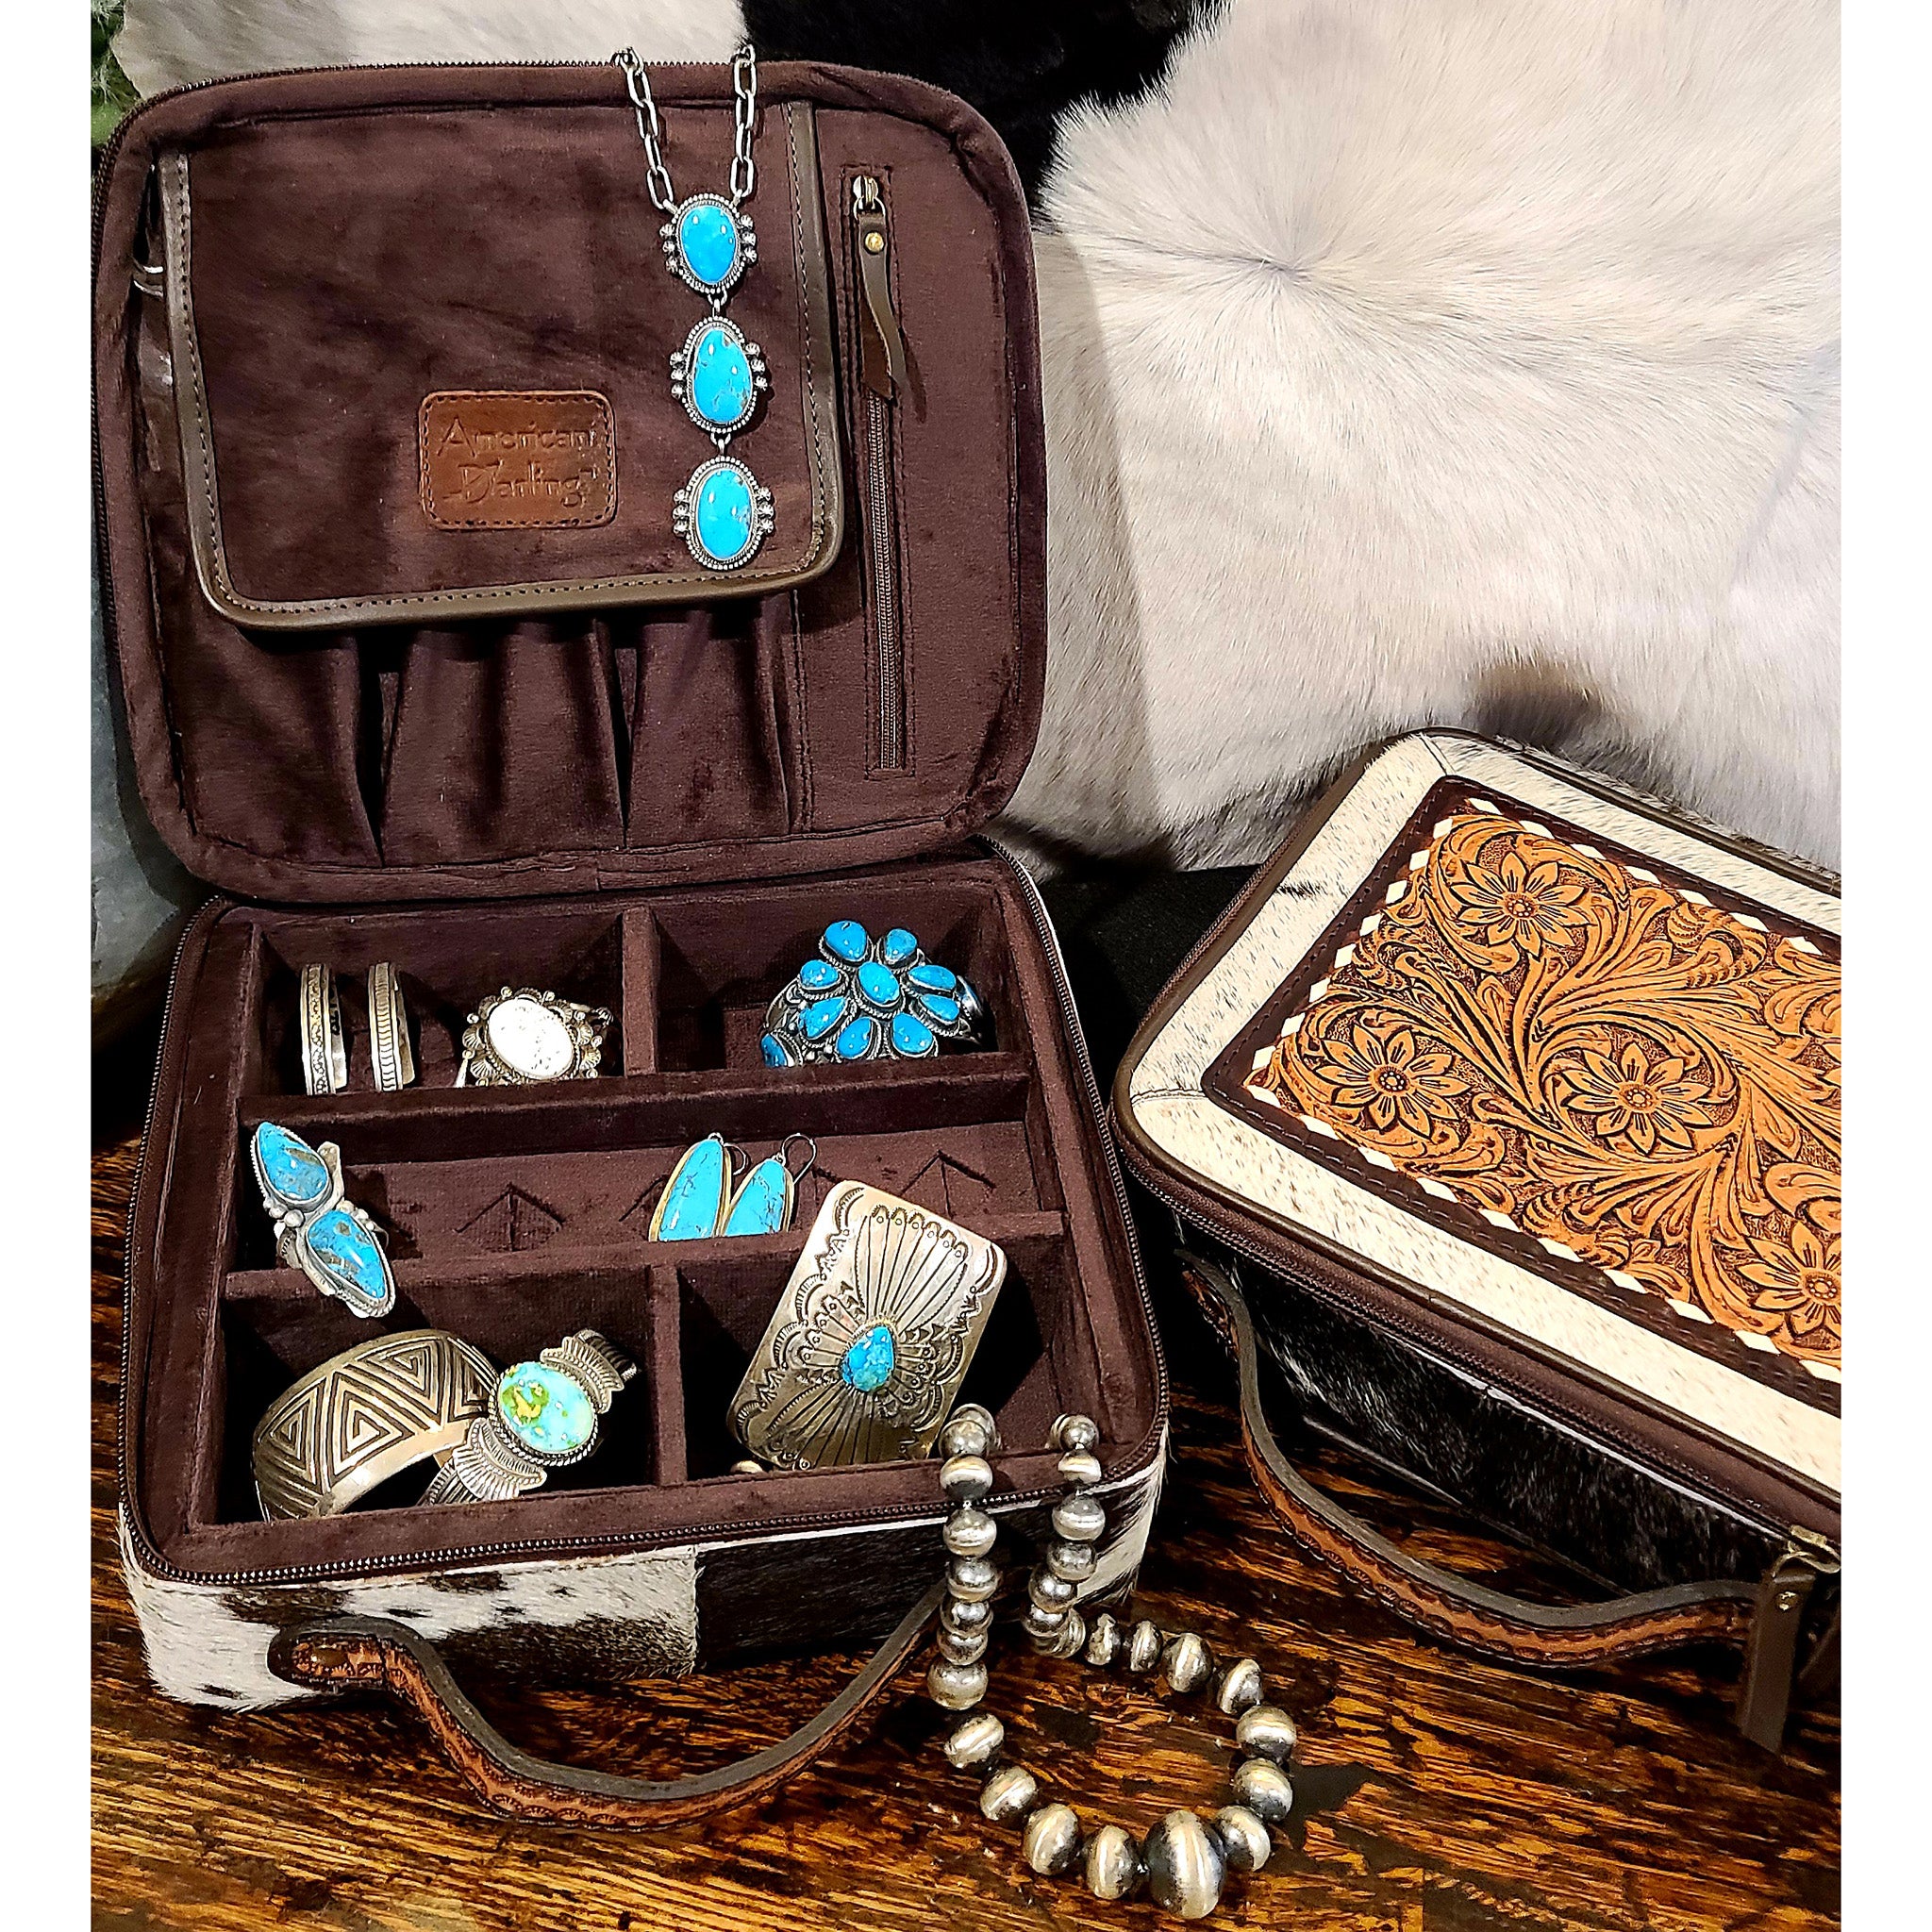 Travel Jewelry Box